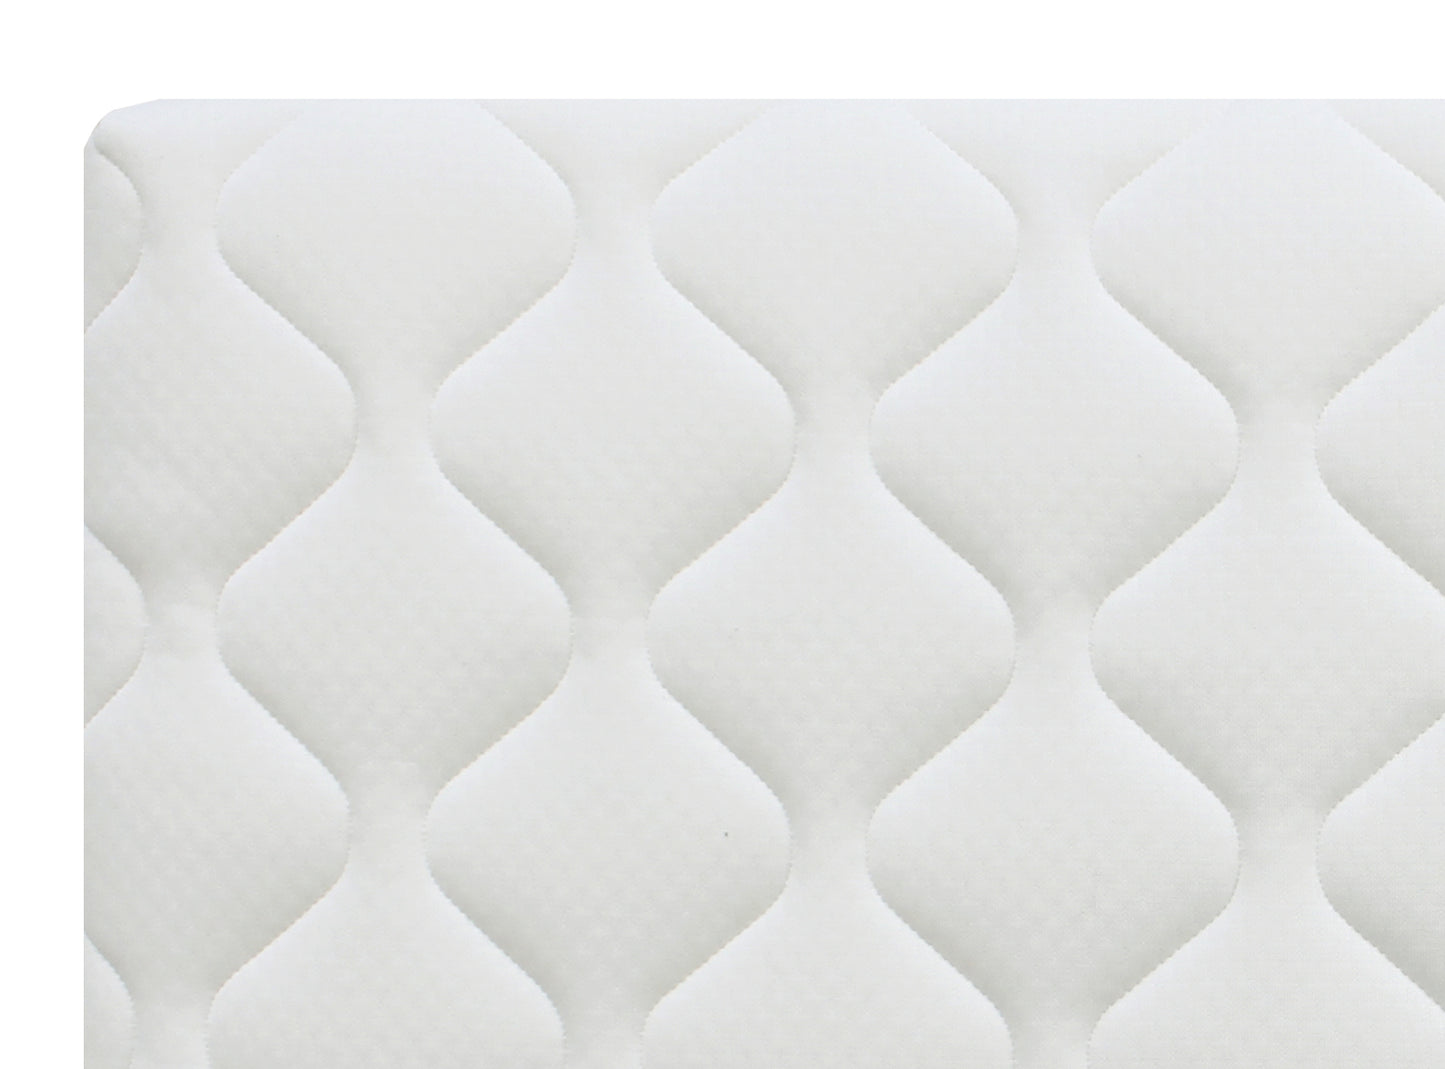 Bopita mattress box luxury 95x75x6 cm with removable cover